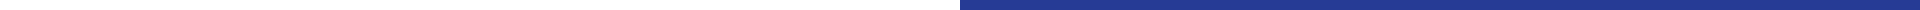 RJD-blue-line-halfpage